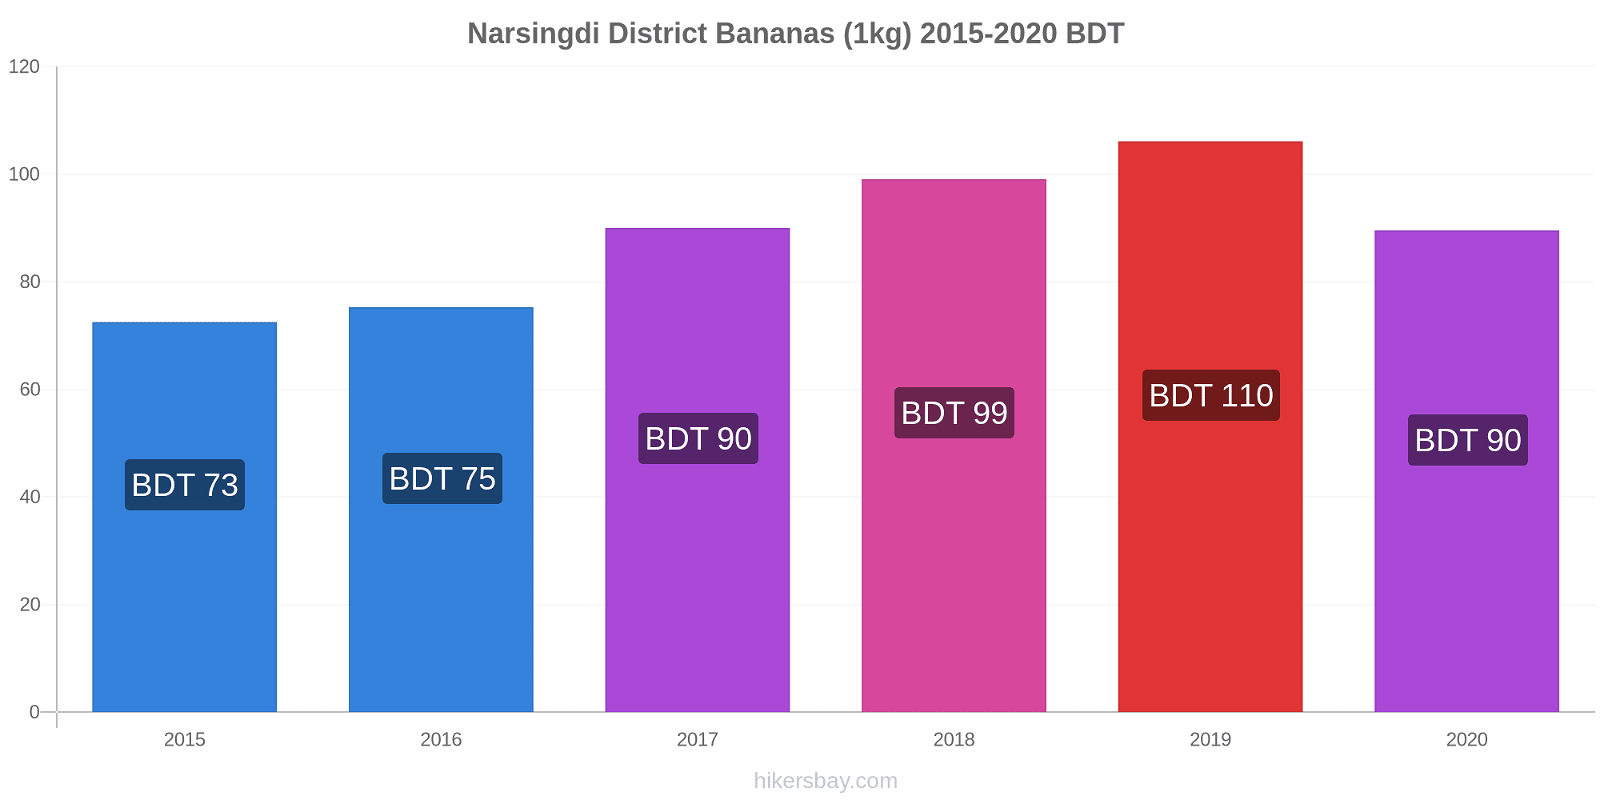 Narsingdi District price changes Bananas (1kg) hikersbay.com